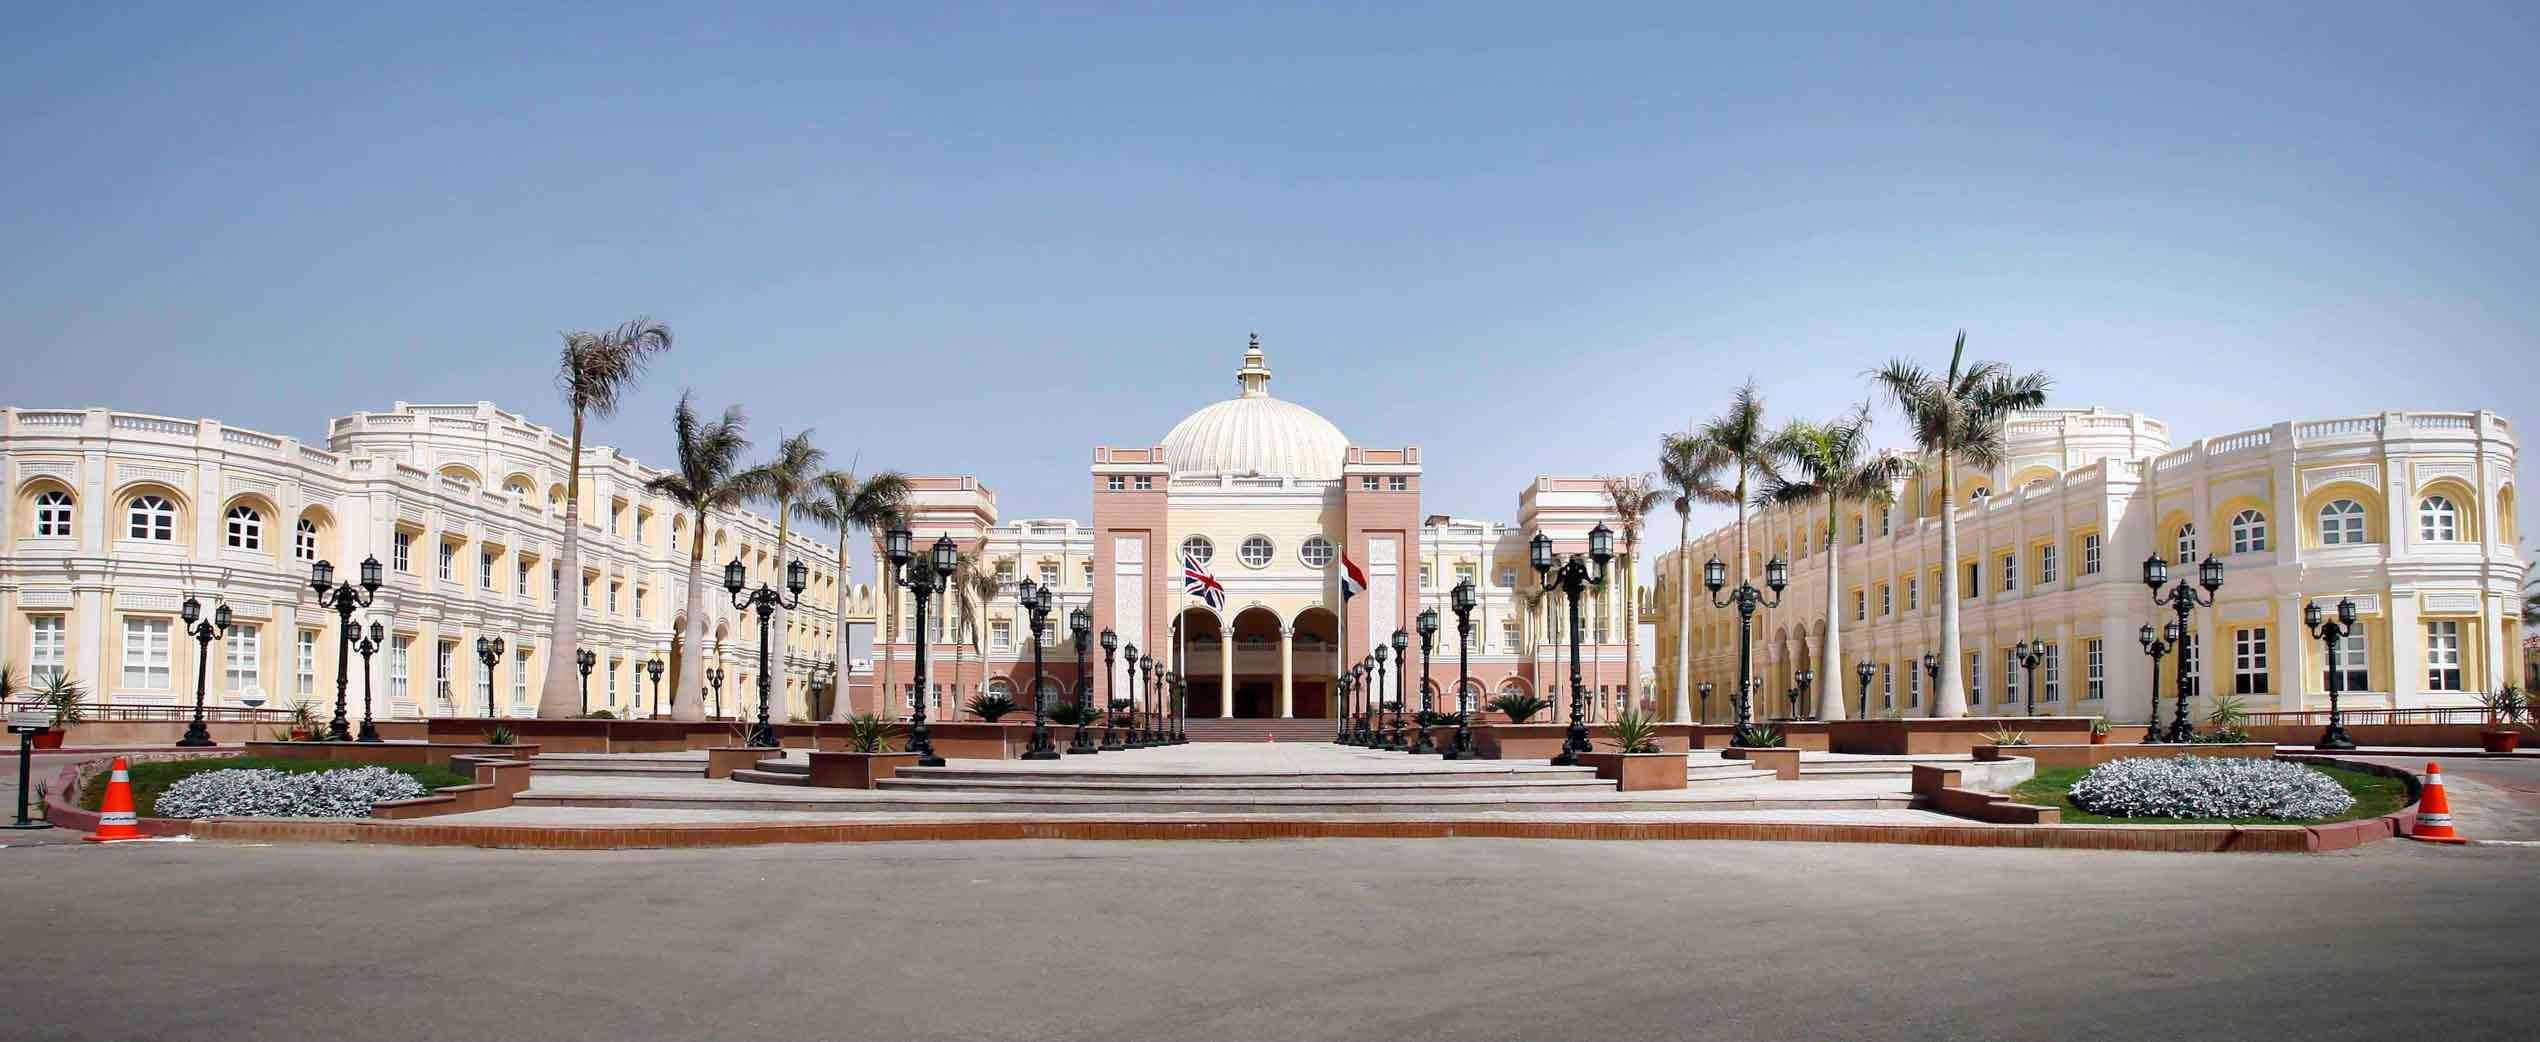 The British University in Egypt (BUE)